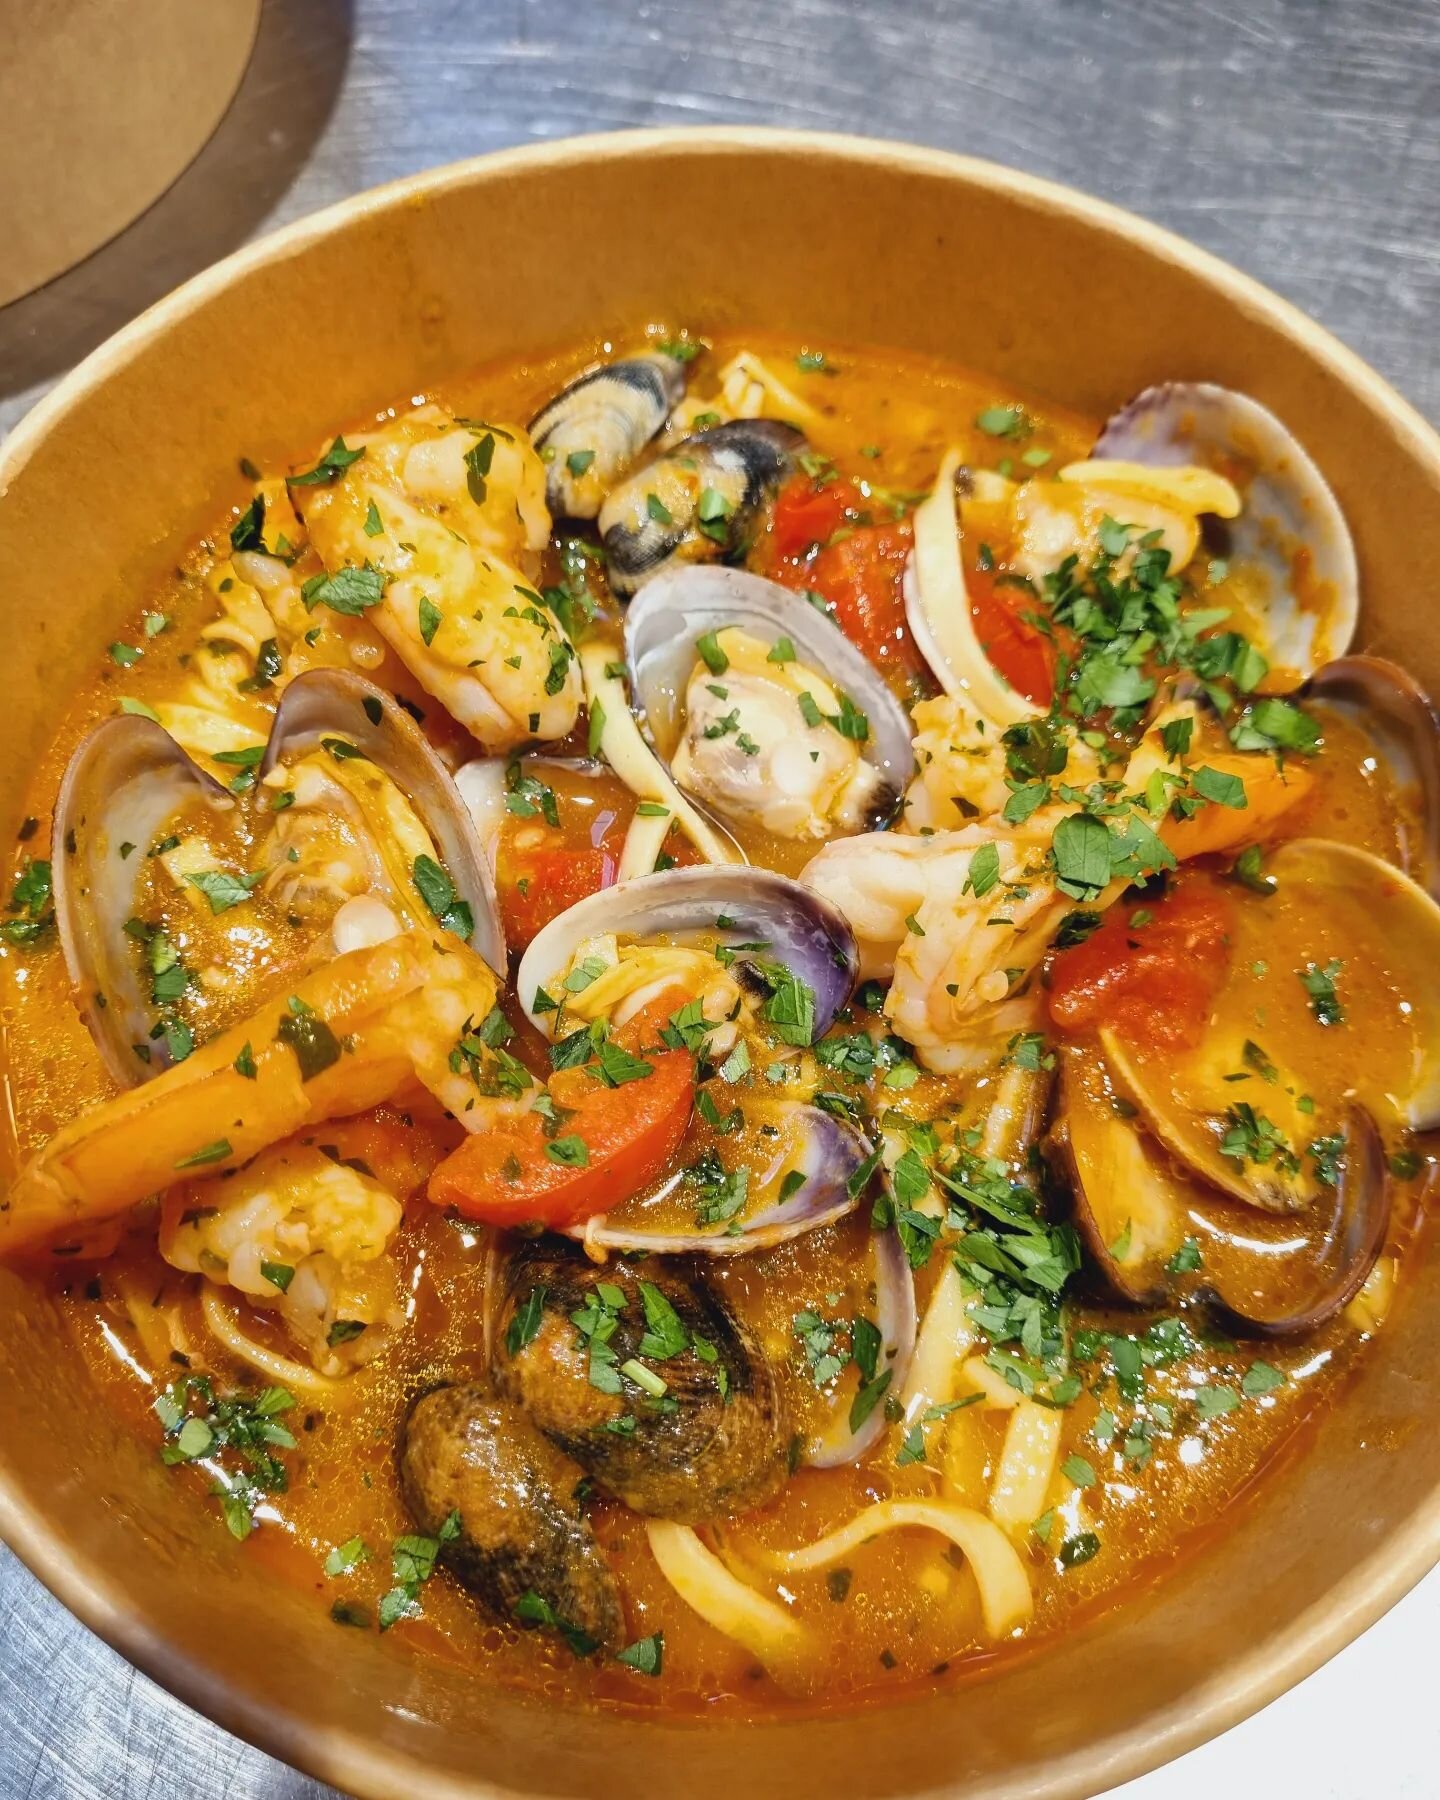 homemade tagliatelle
with seafood
#cucinaitaliana